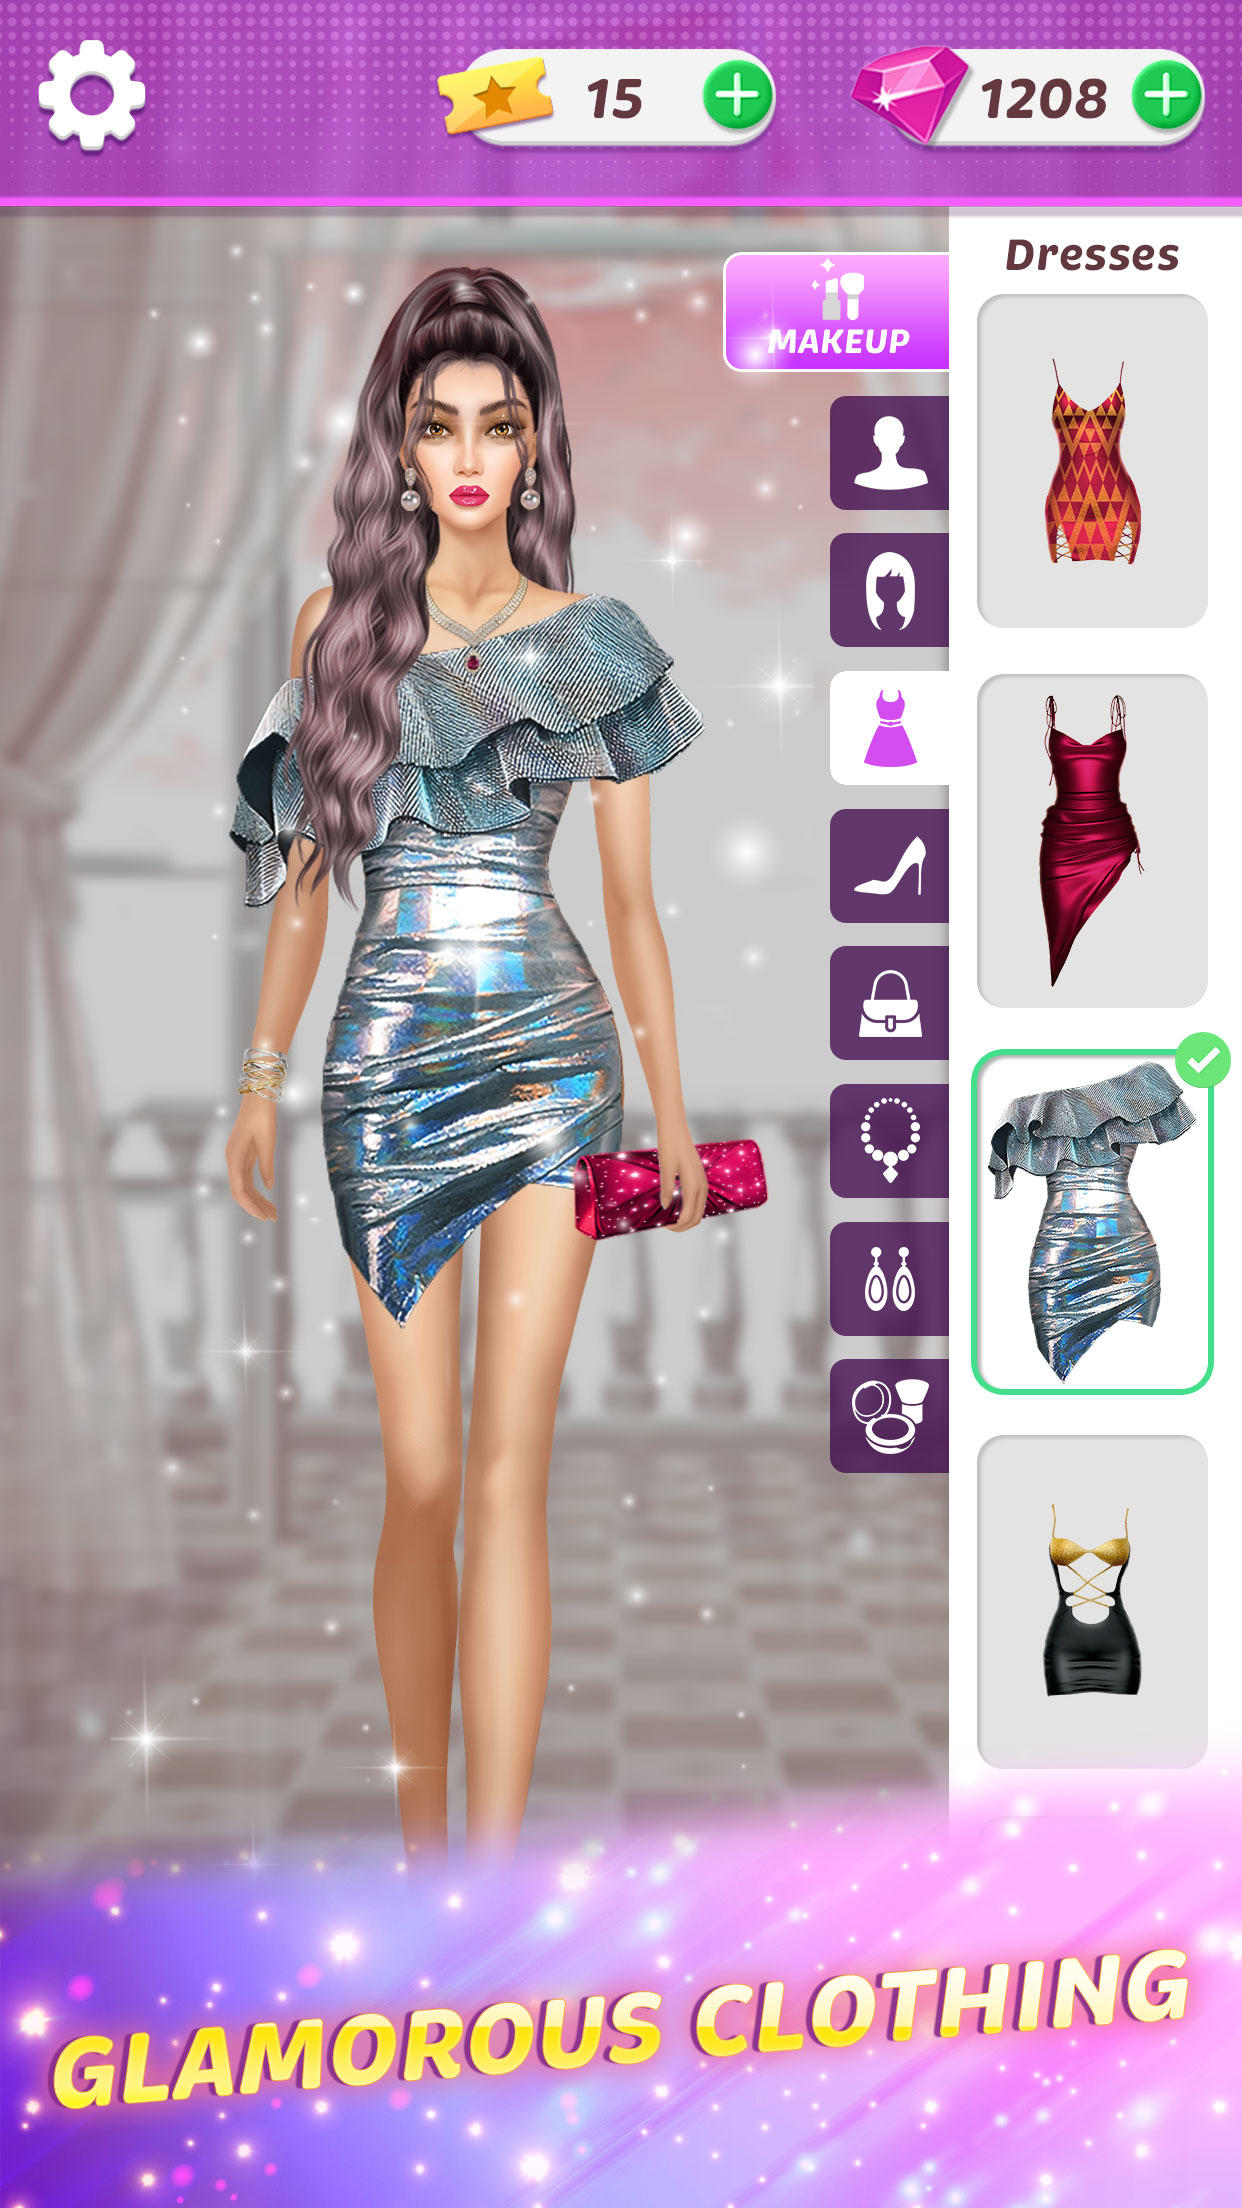 Magical Dress Up Game APK para Android - Download